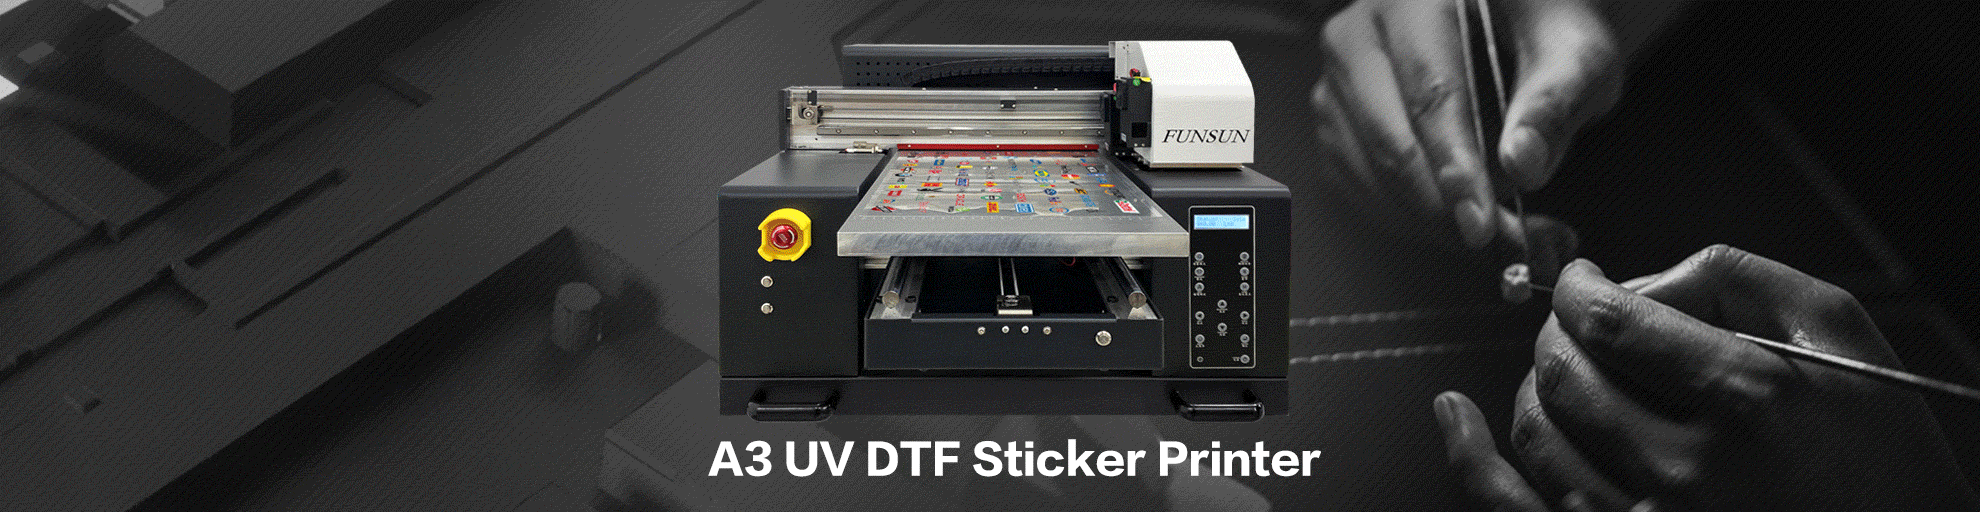  Ovsuqu A3 UV DTF Printer UV Sticker Printer PET Film Transfer  Printing Machine Golden Foil Film Sticker for Glass, Wood, Leather US Stock  (UV DTF kit) : Office Products